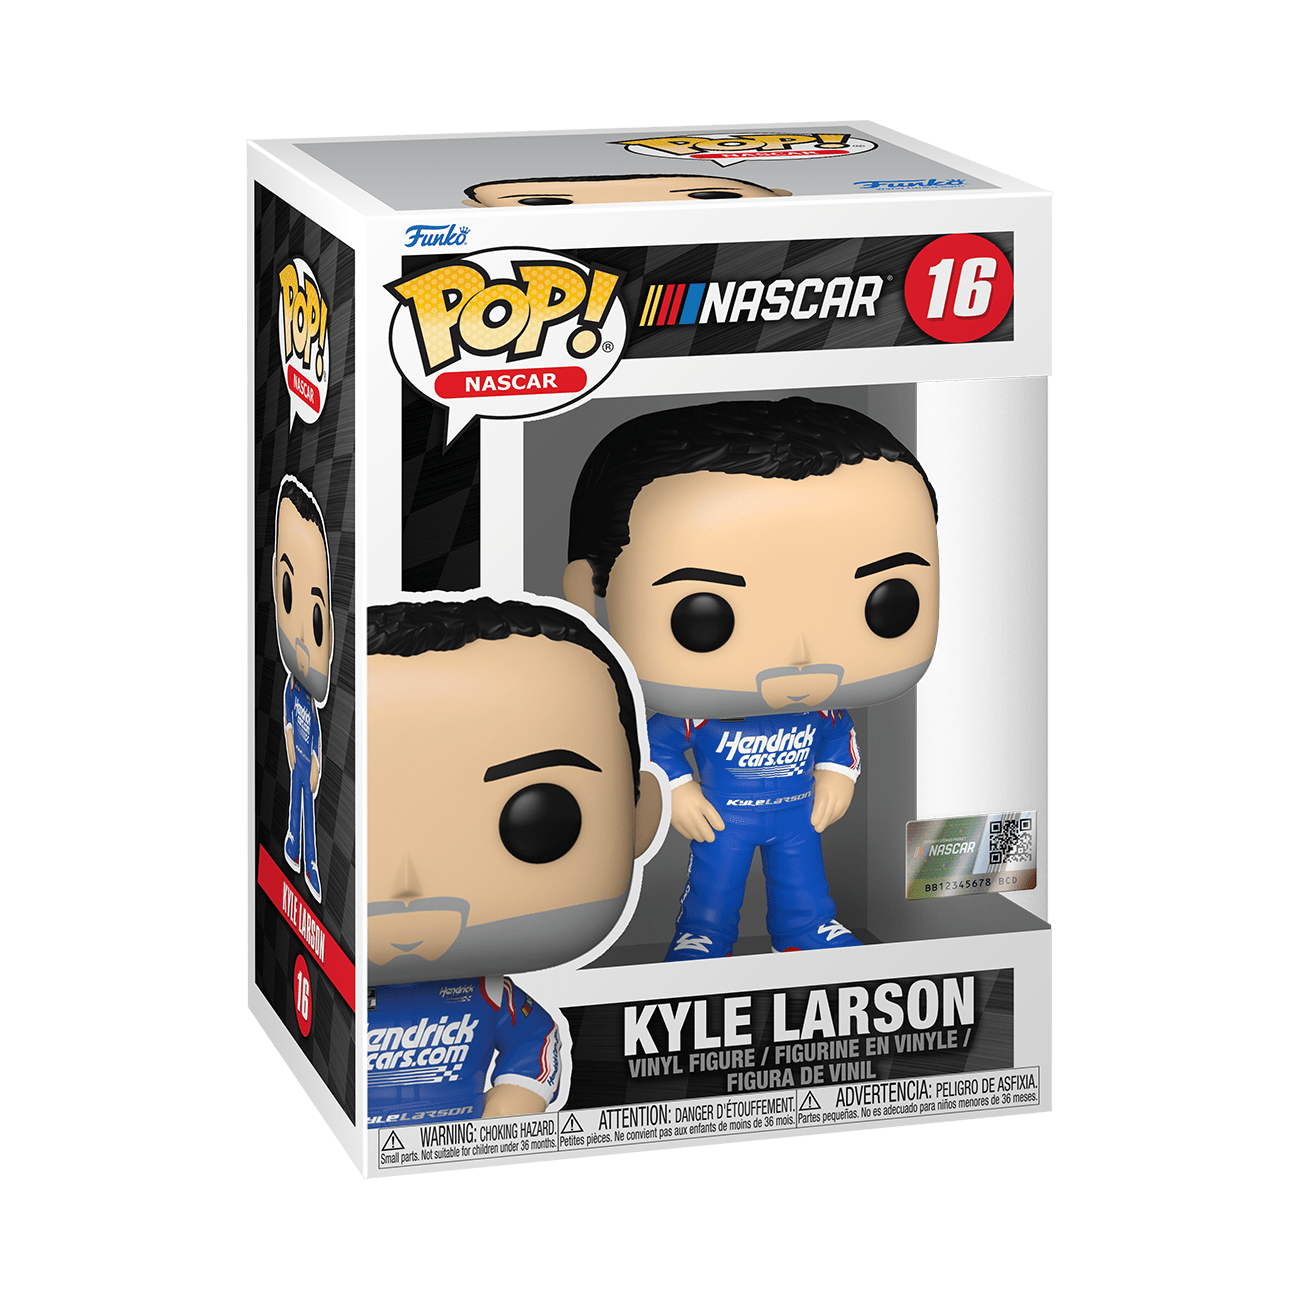 Kyle Larson 16